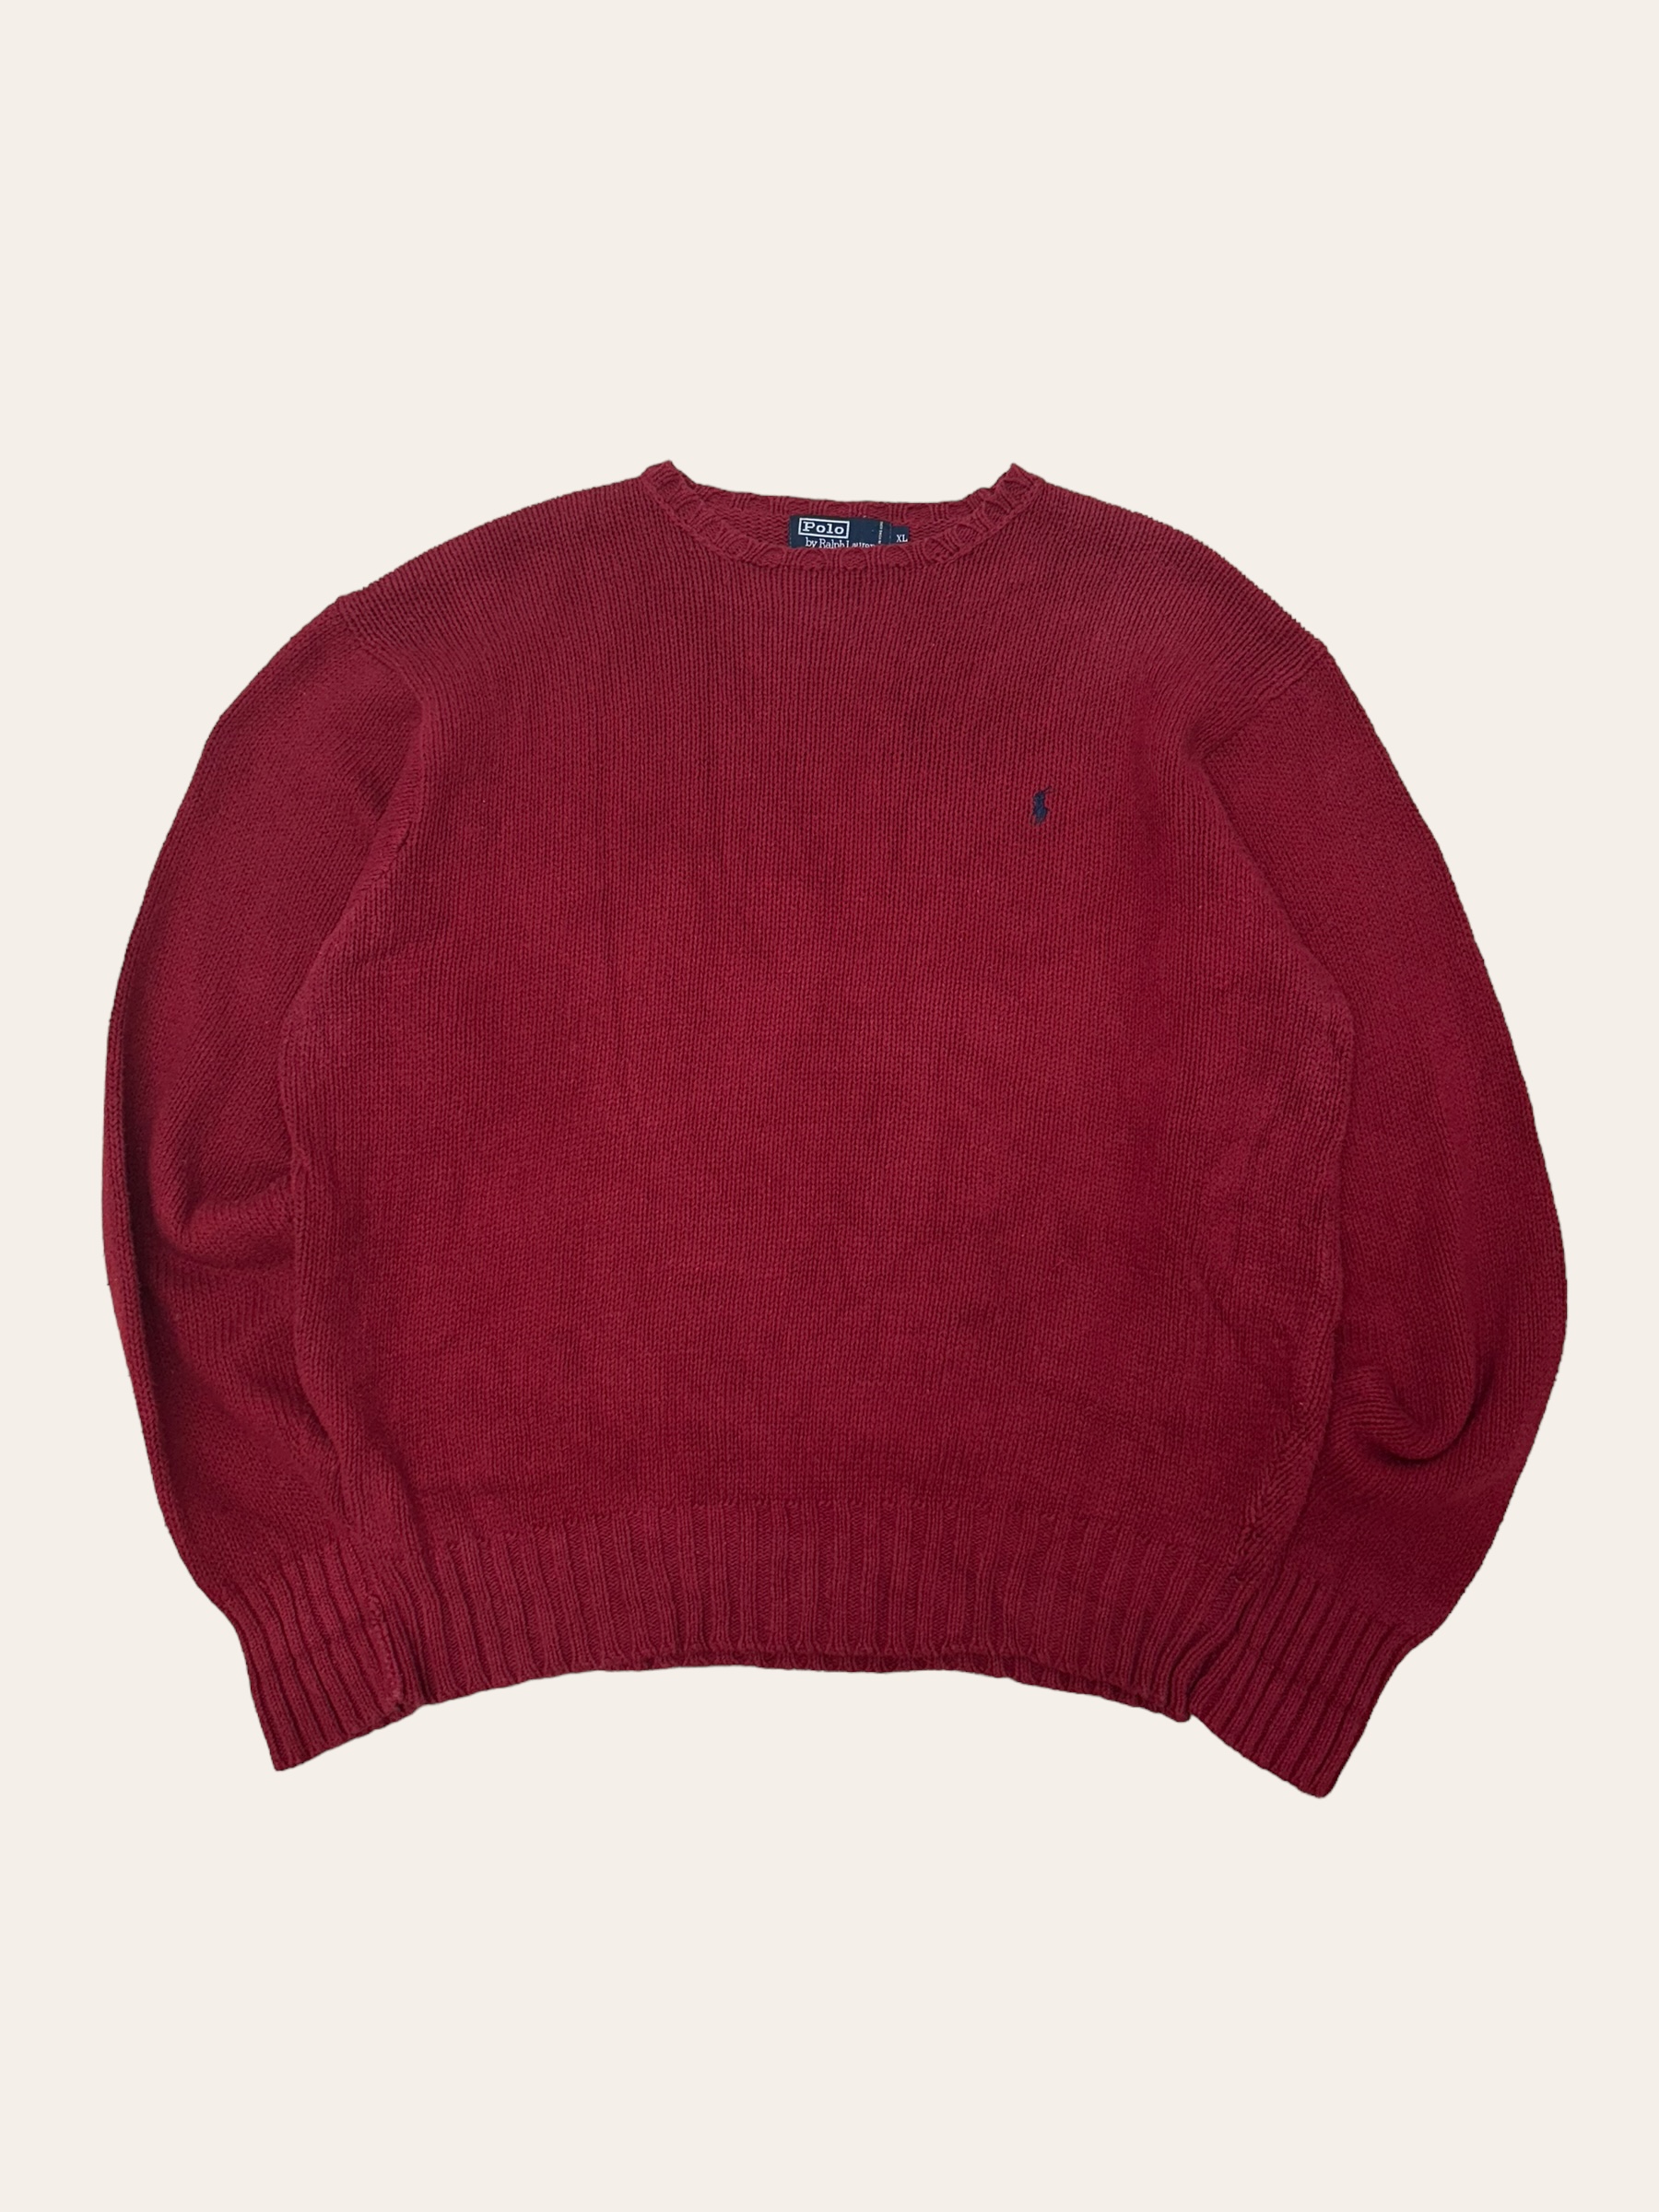 Polo ralph lauren red crewneck cotton sweater XL